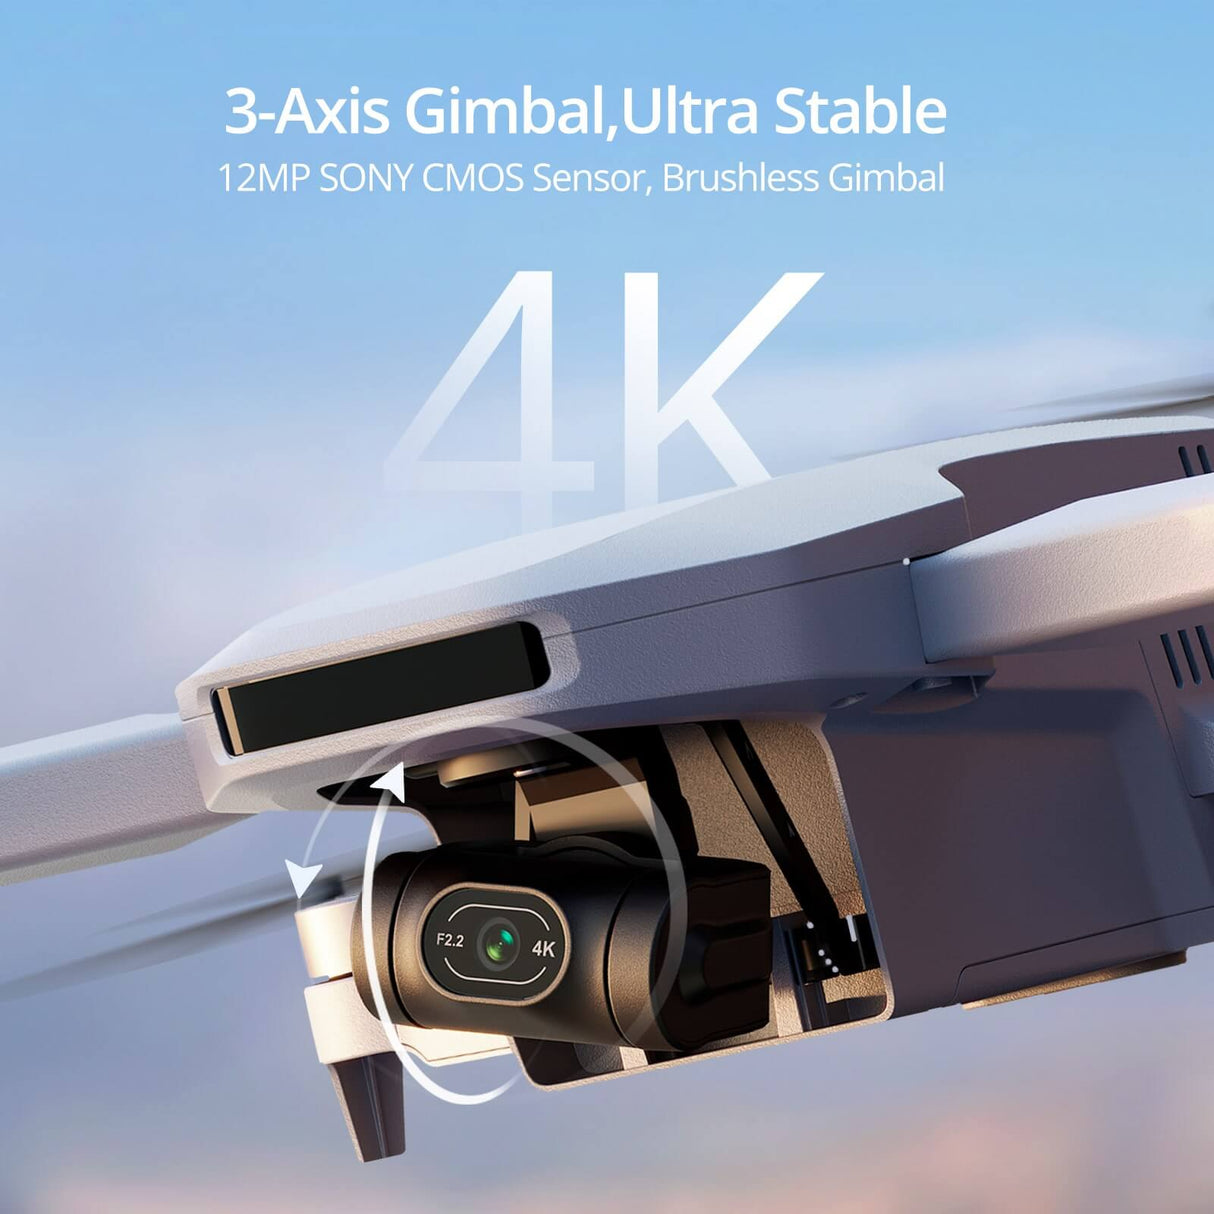 ATOM Drone with 4K HD Camera